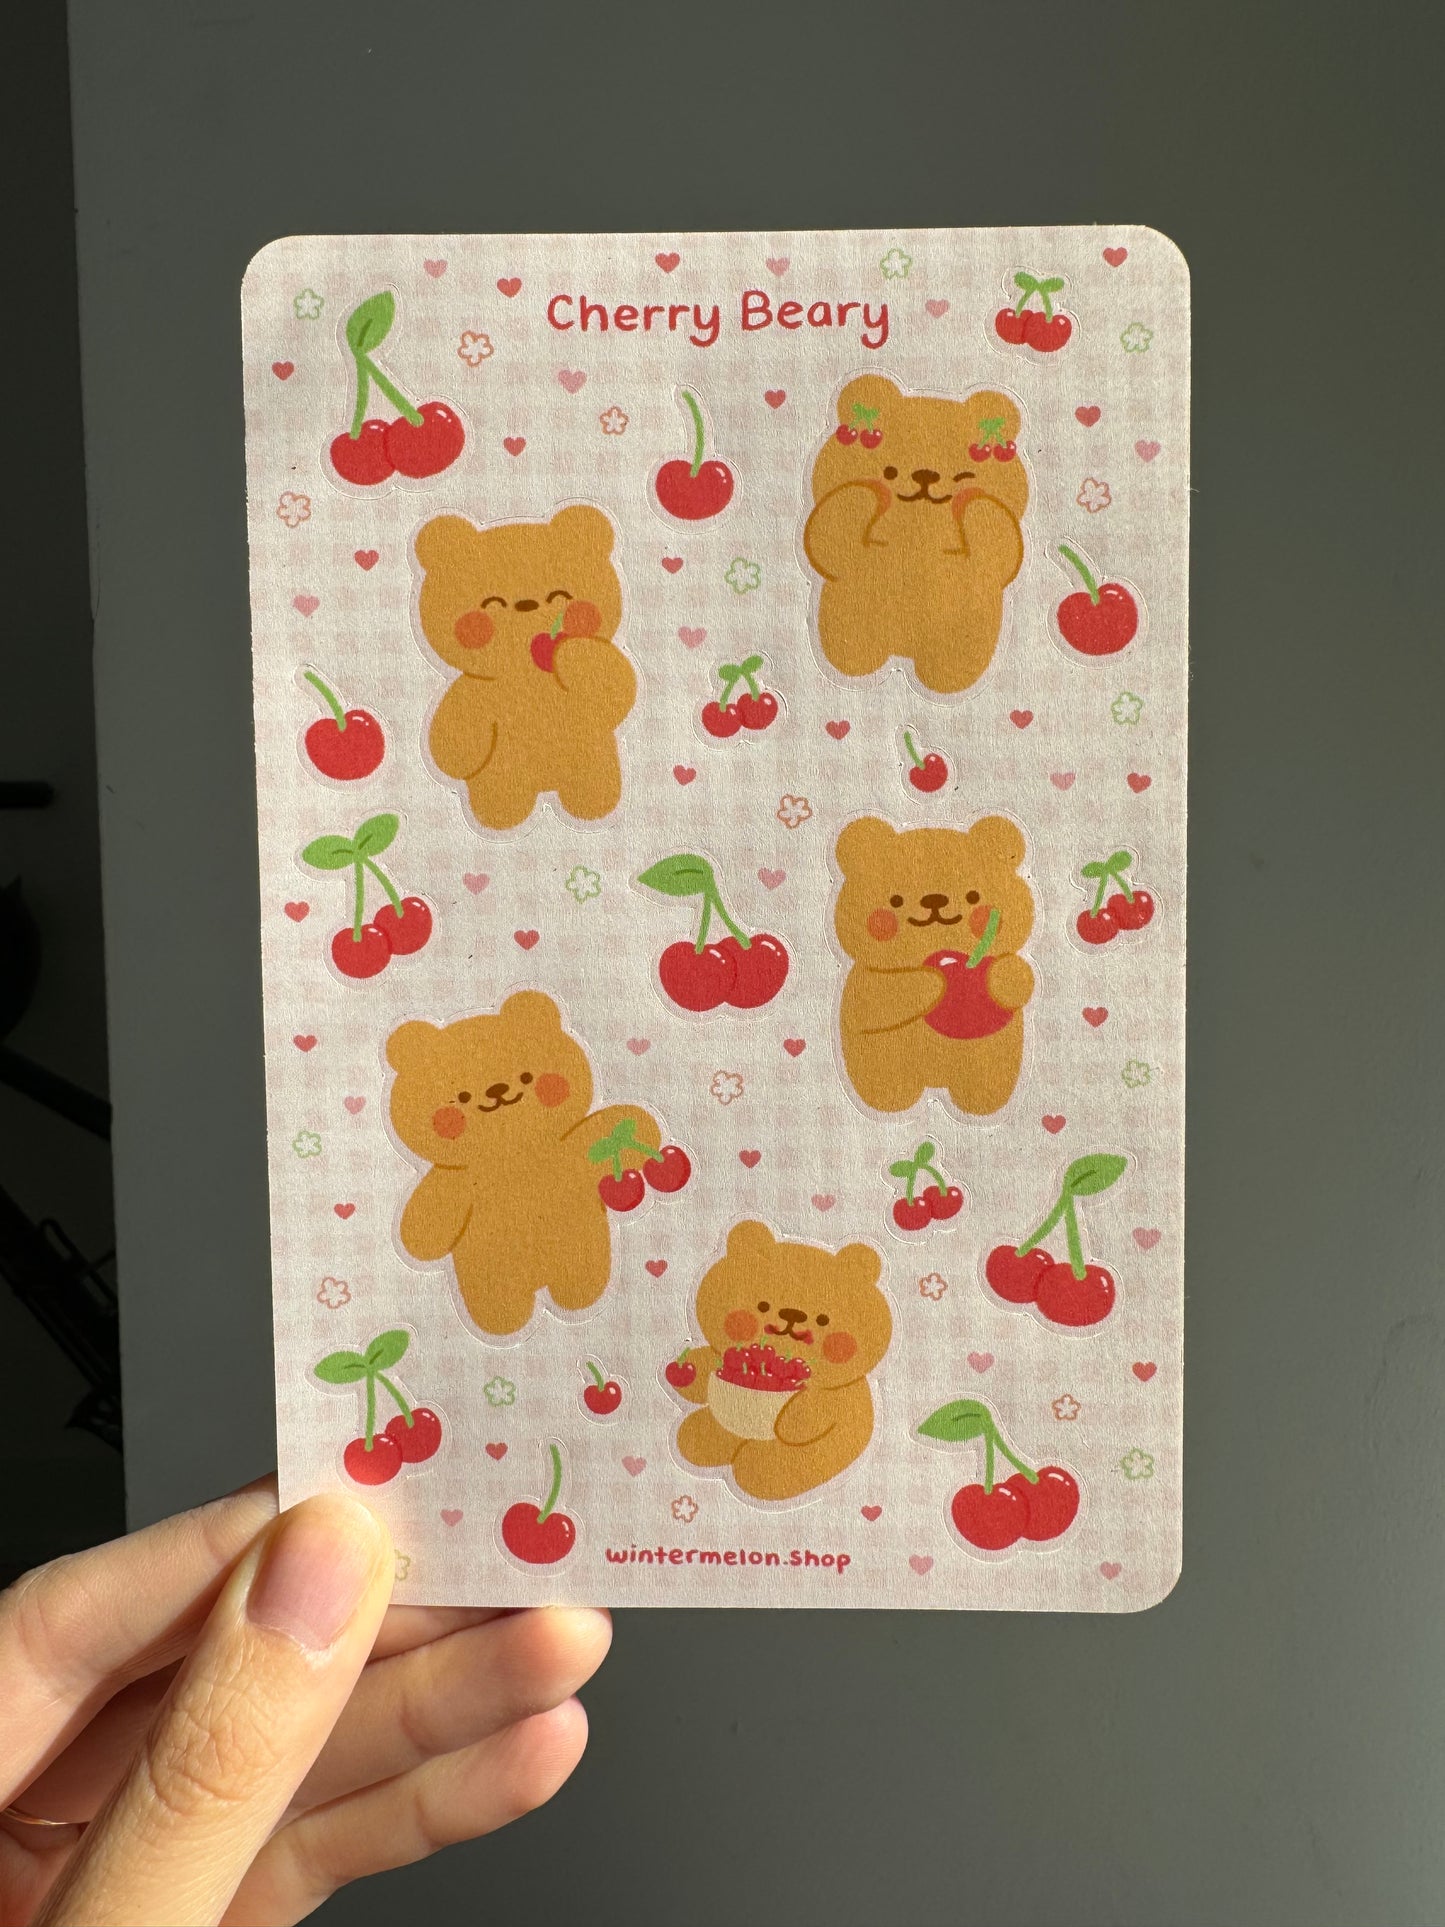 Cherry Beary (Sticker sheet)